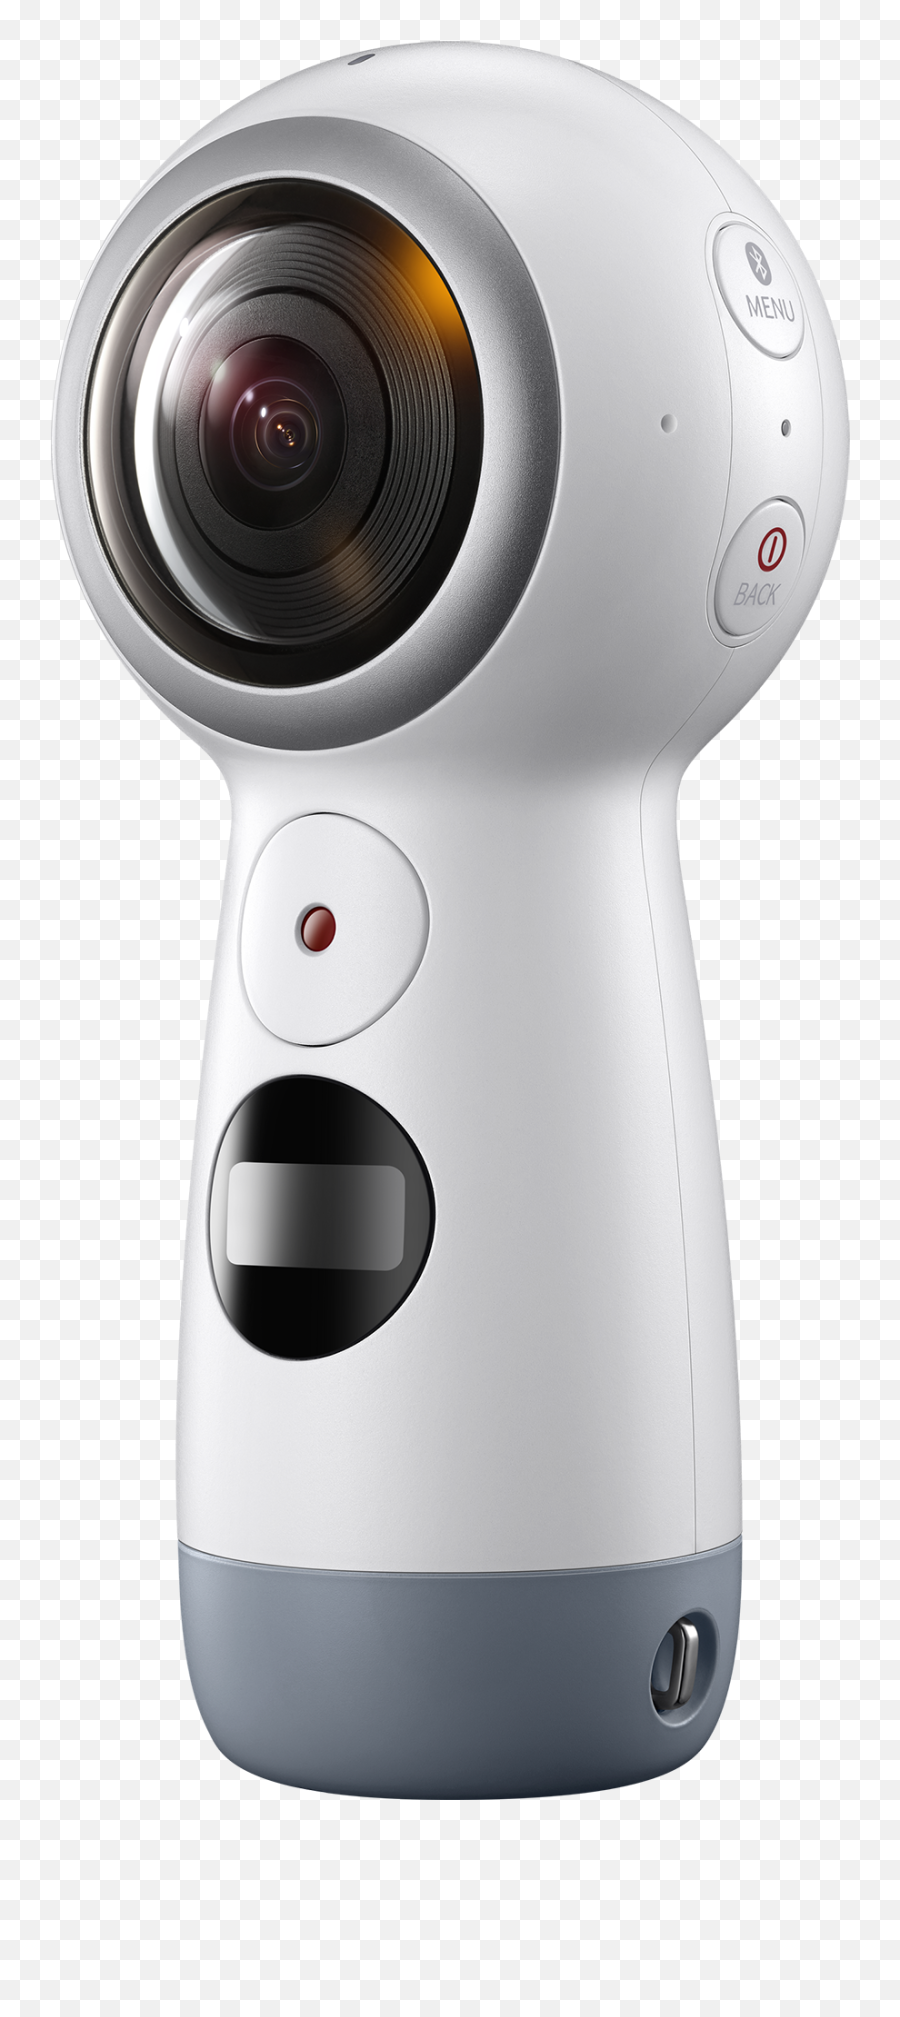 Samsungu0027s New Gear 360 Introduces True 4k Video - Degree 360 Degree Samsung Camera Png,Gear Transparent